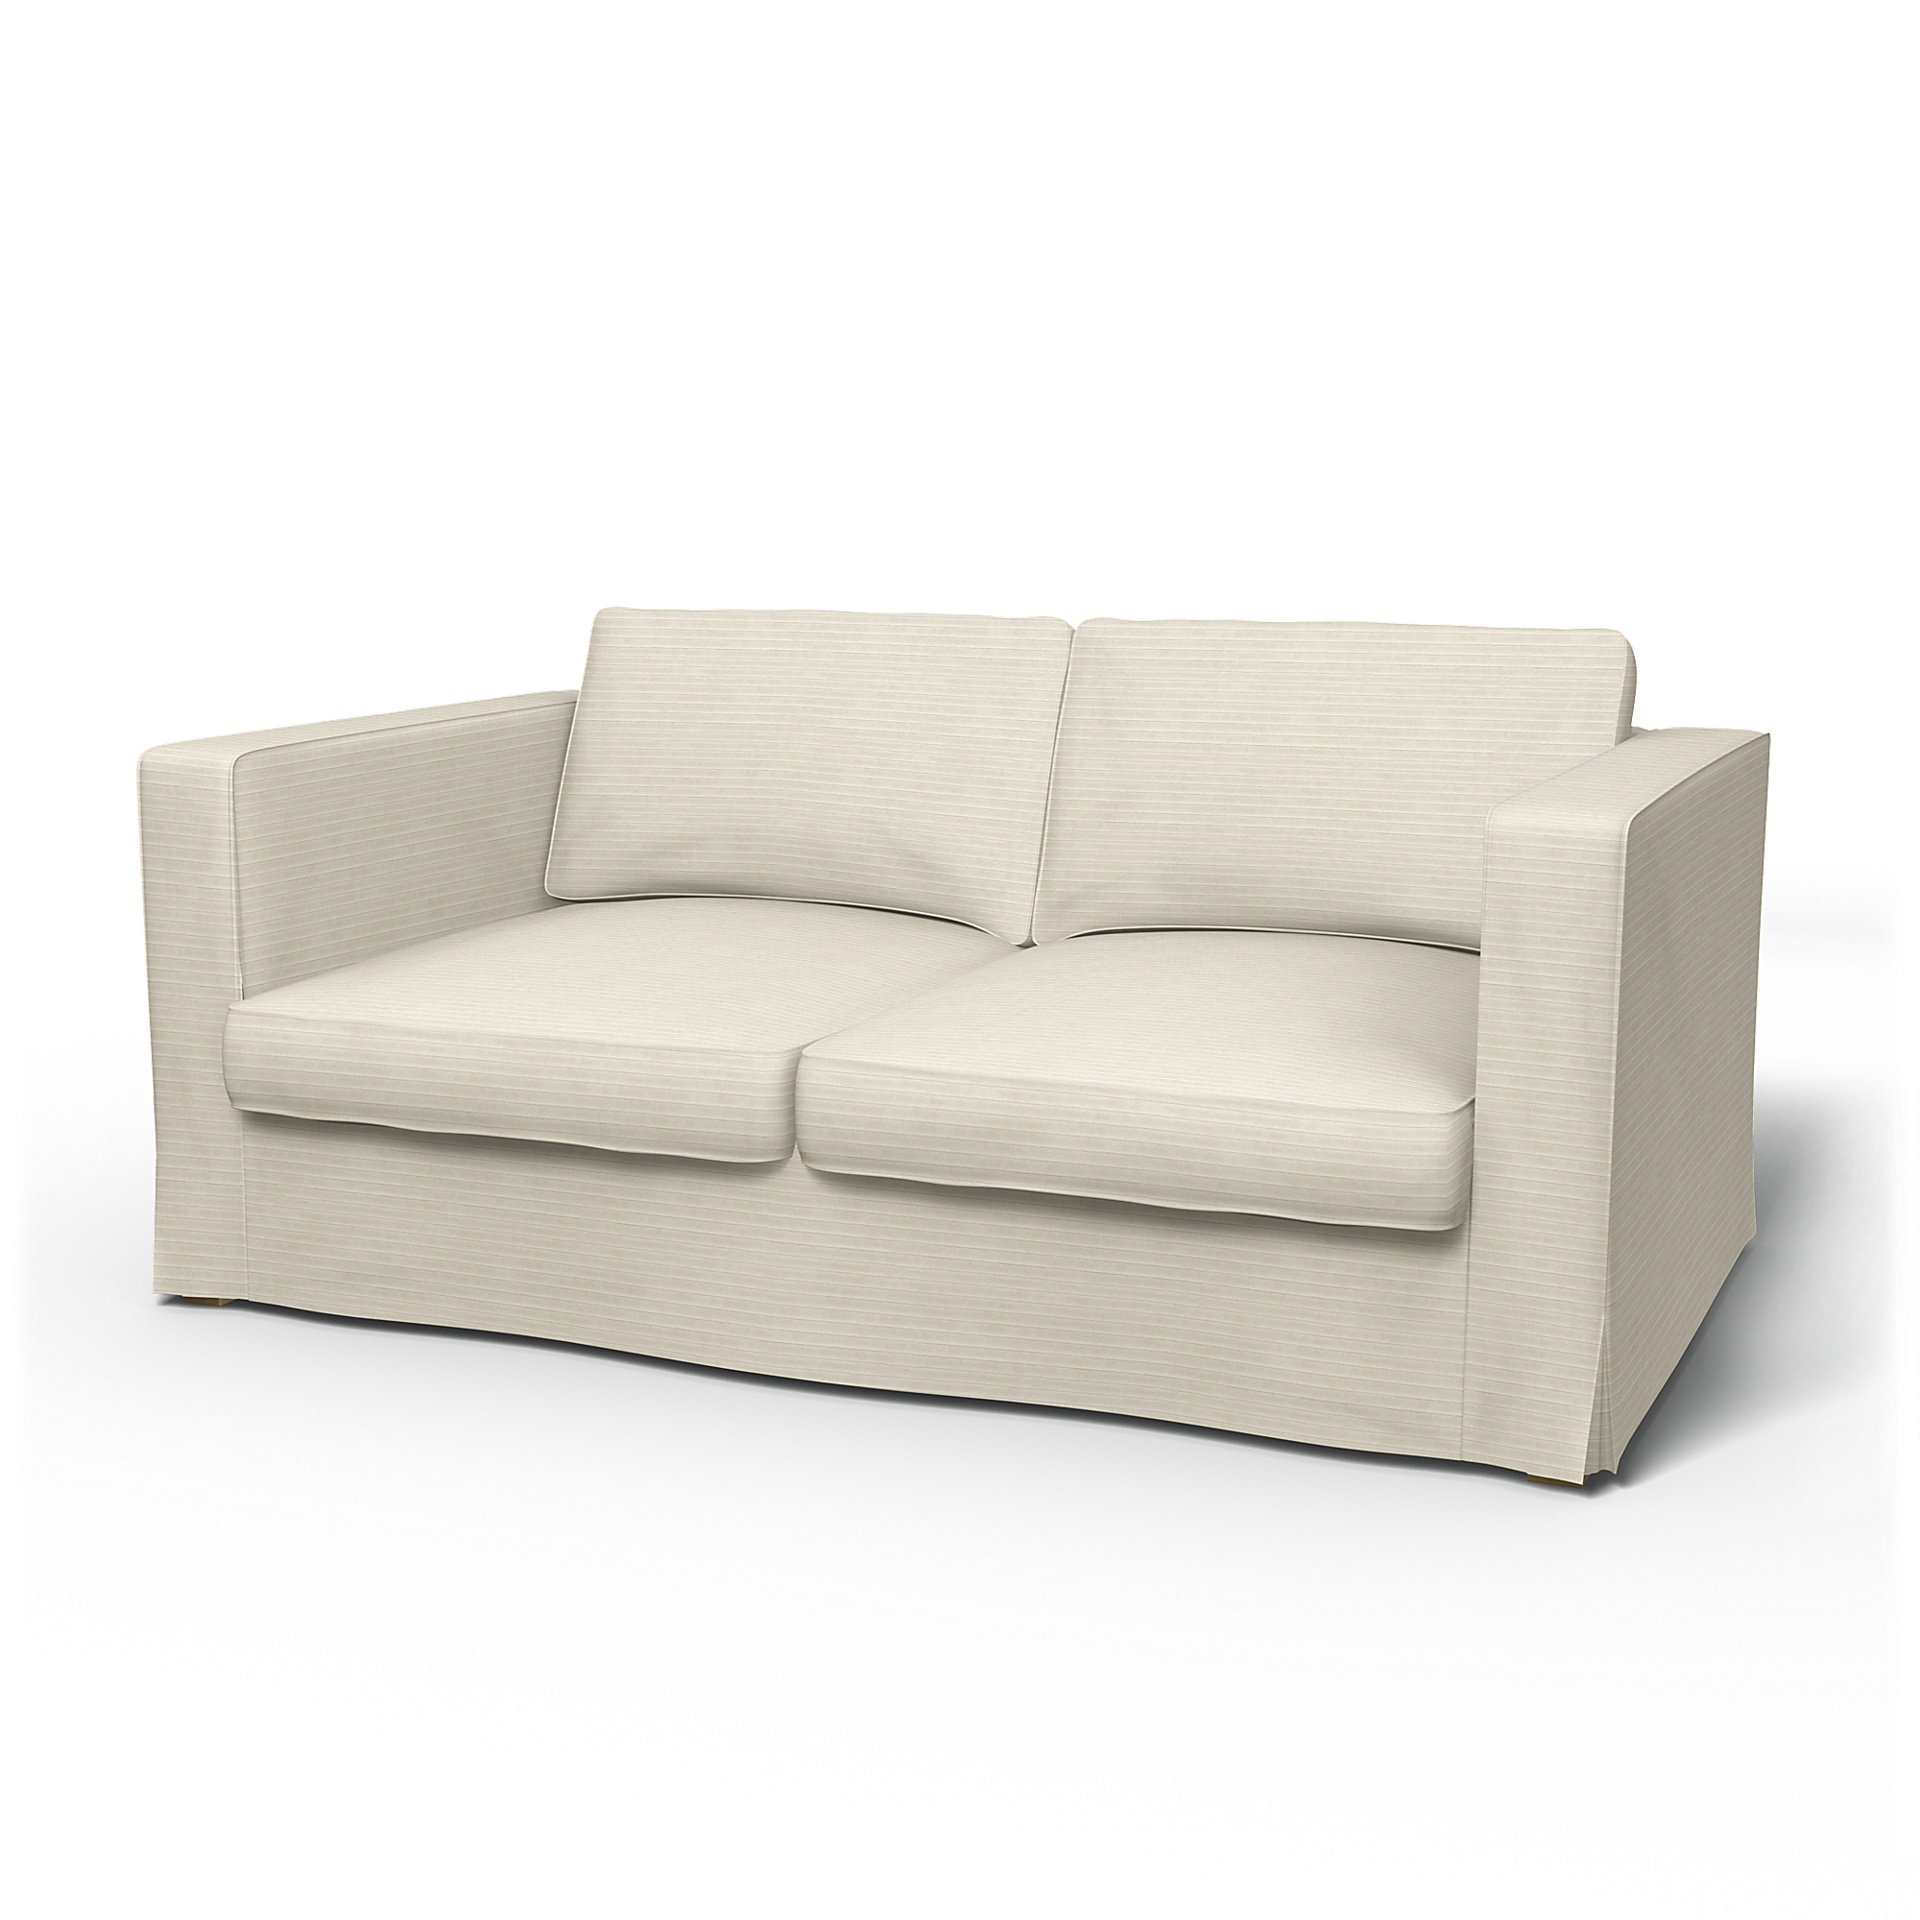 IKEA - Karlstad 2 Seater Sofa Cover, Tofu, Corduroy - Bemz